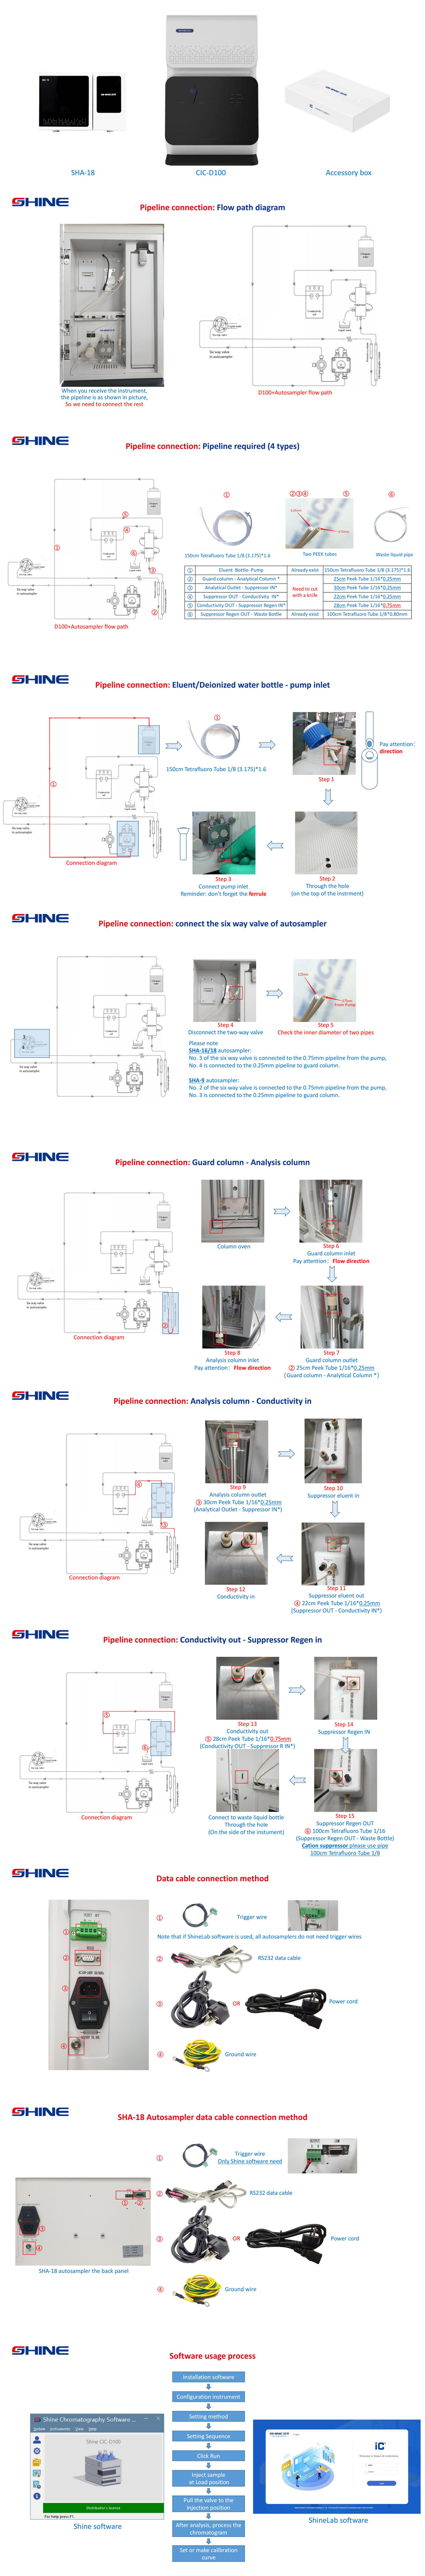 CIC-D100-Installation-Guide(Autosampler)_00.jpg